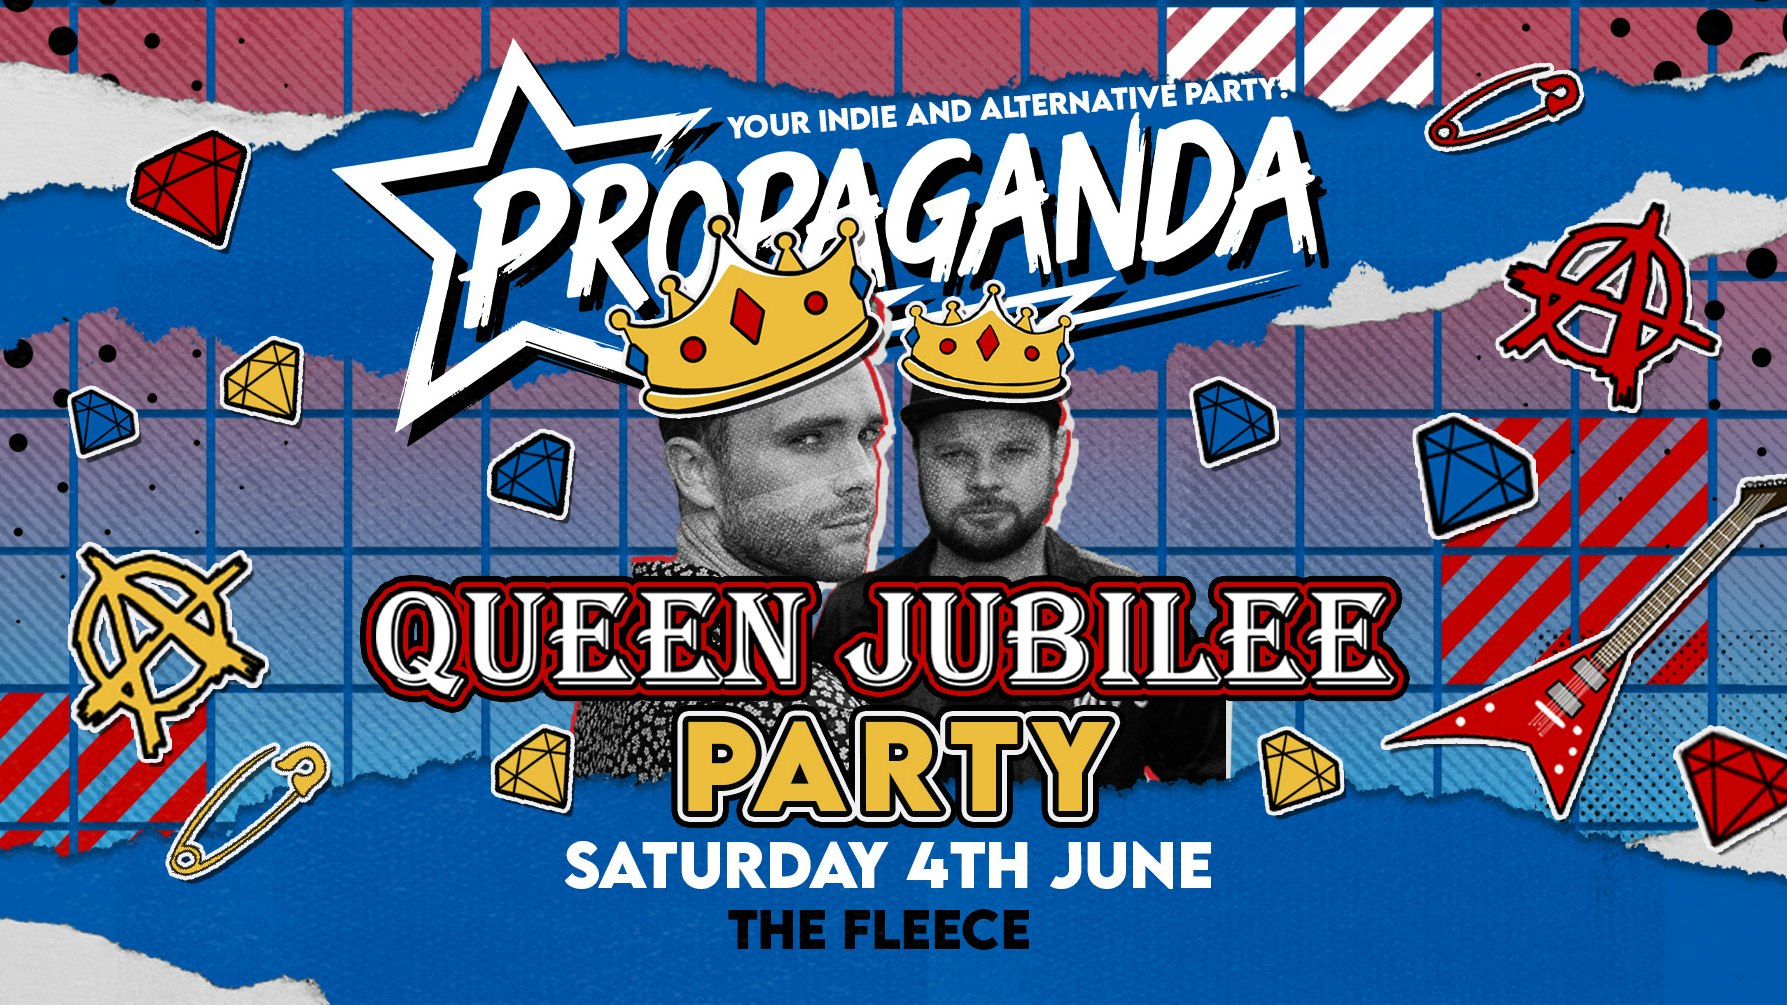 Propaganda Bristol – Queen Jubilee Party!